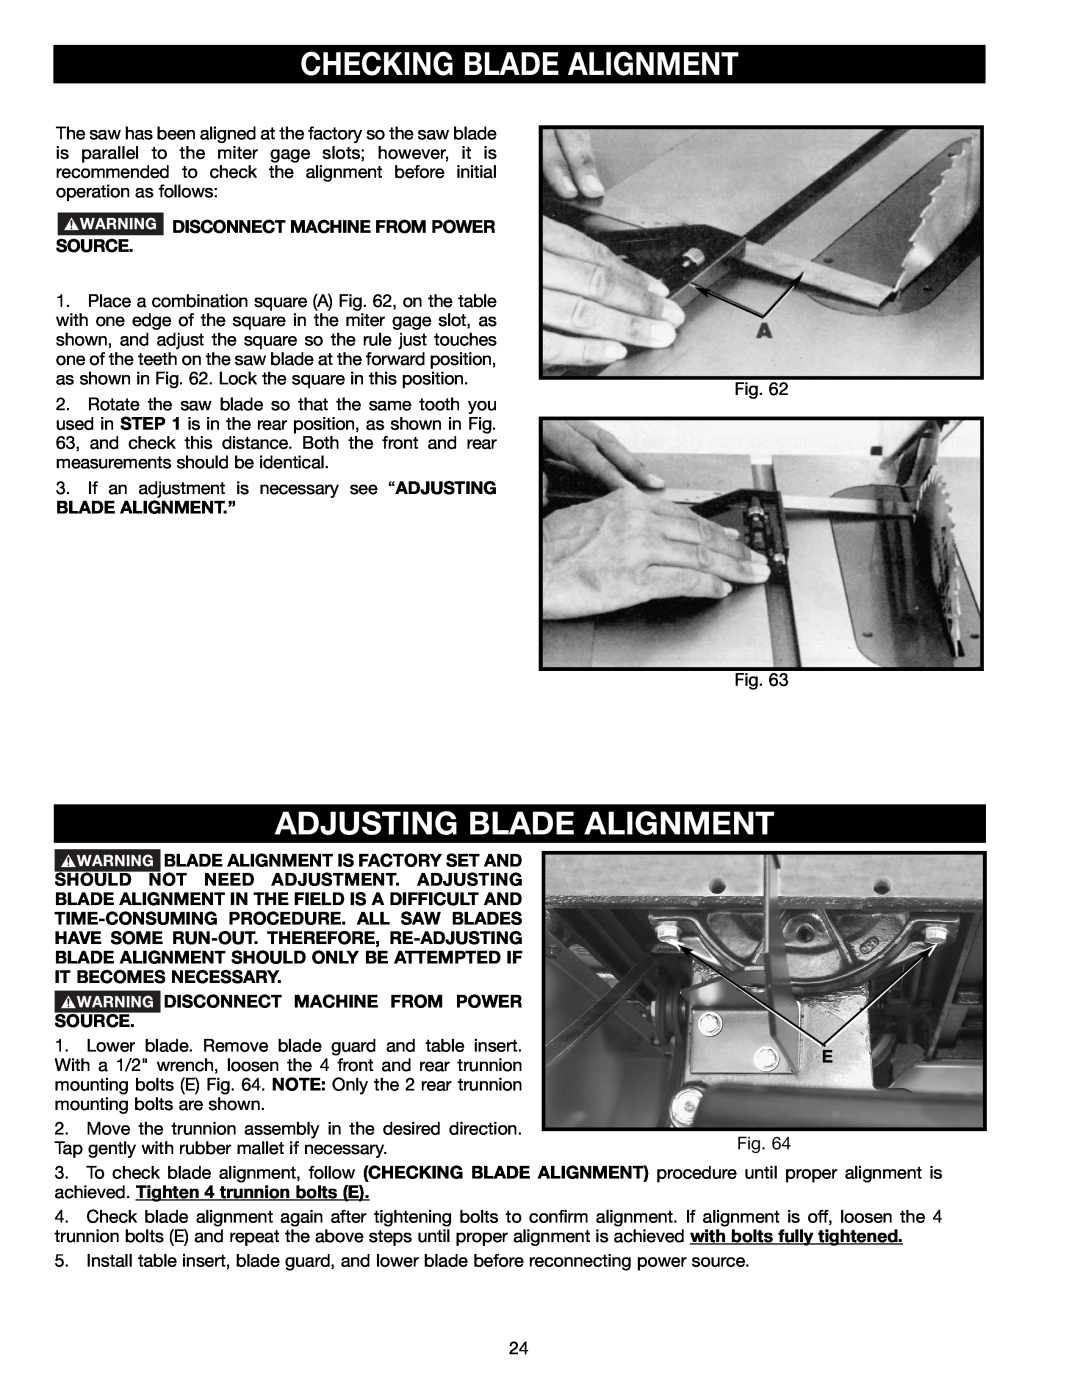 Delta 36-465 Checking Blade Alignment, Adjusting Blade Alignment, Blade Alignment.”, Disconnect Machine From Power Source 